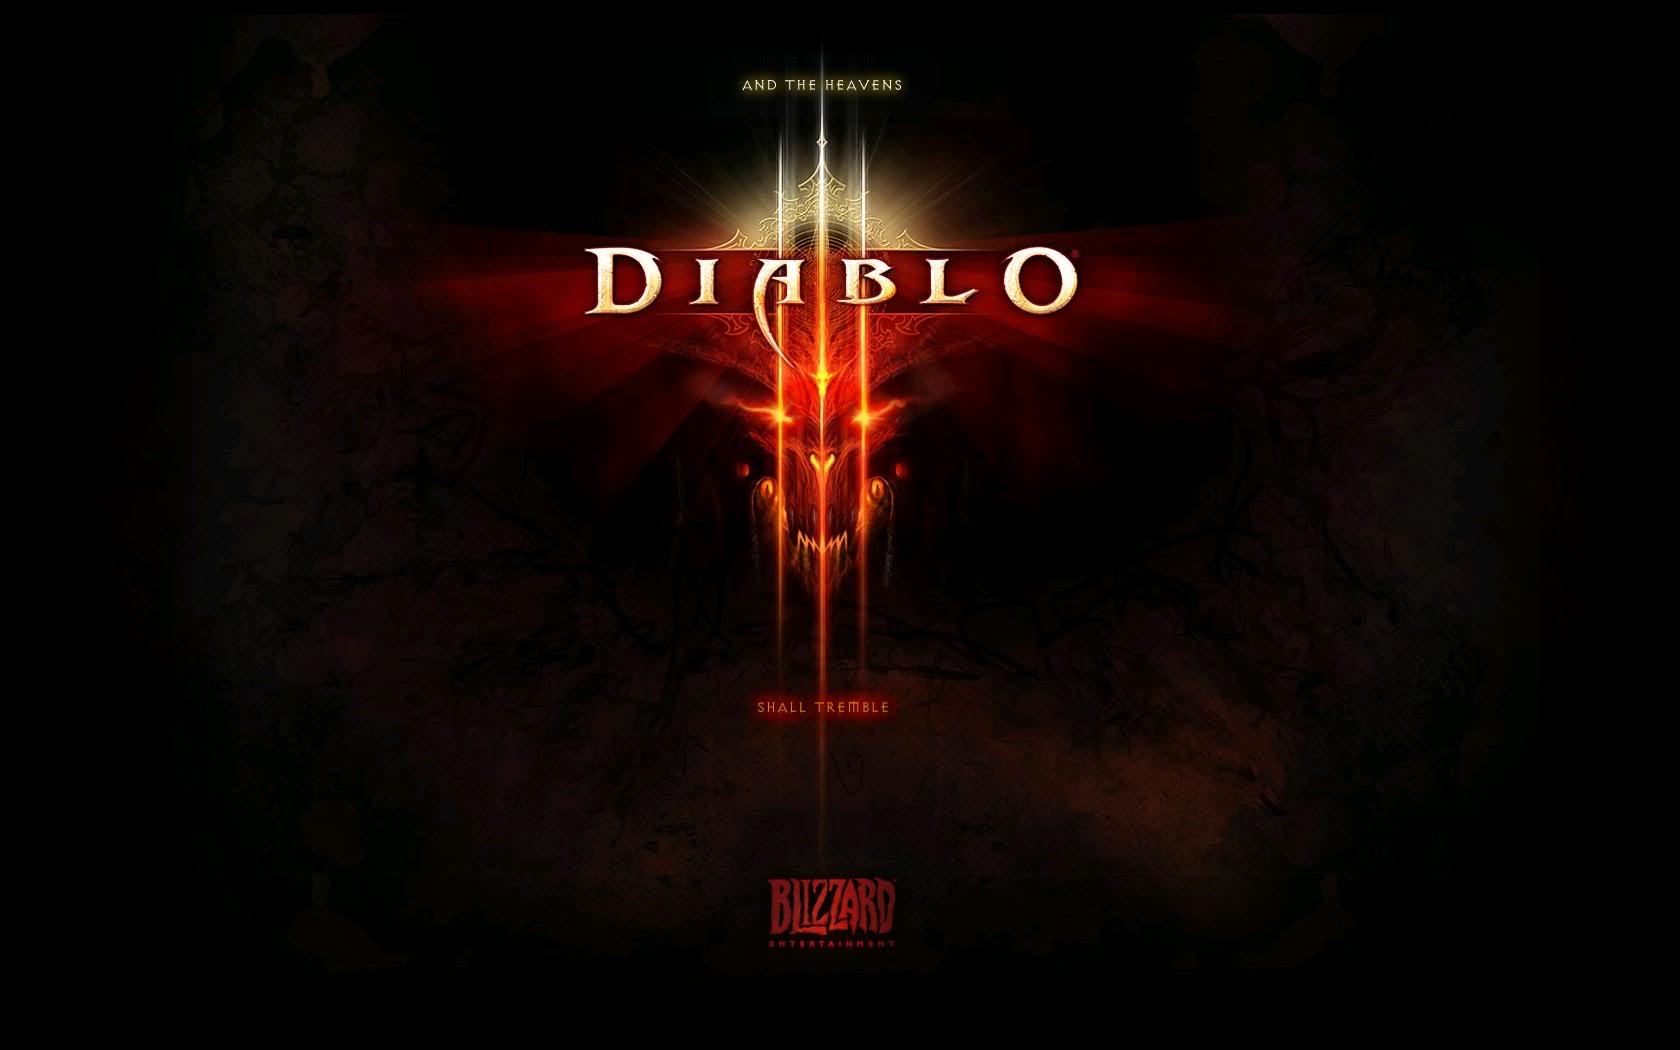 Diablo Background Wallpaper For